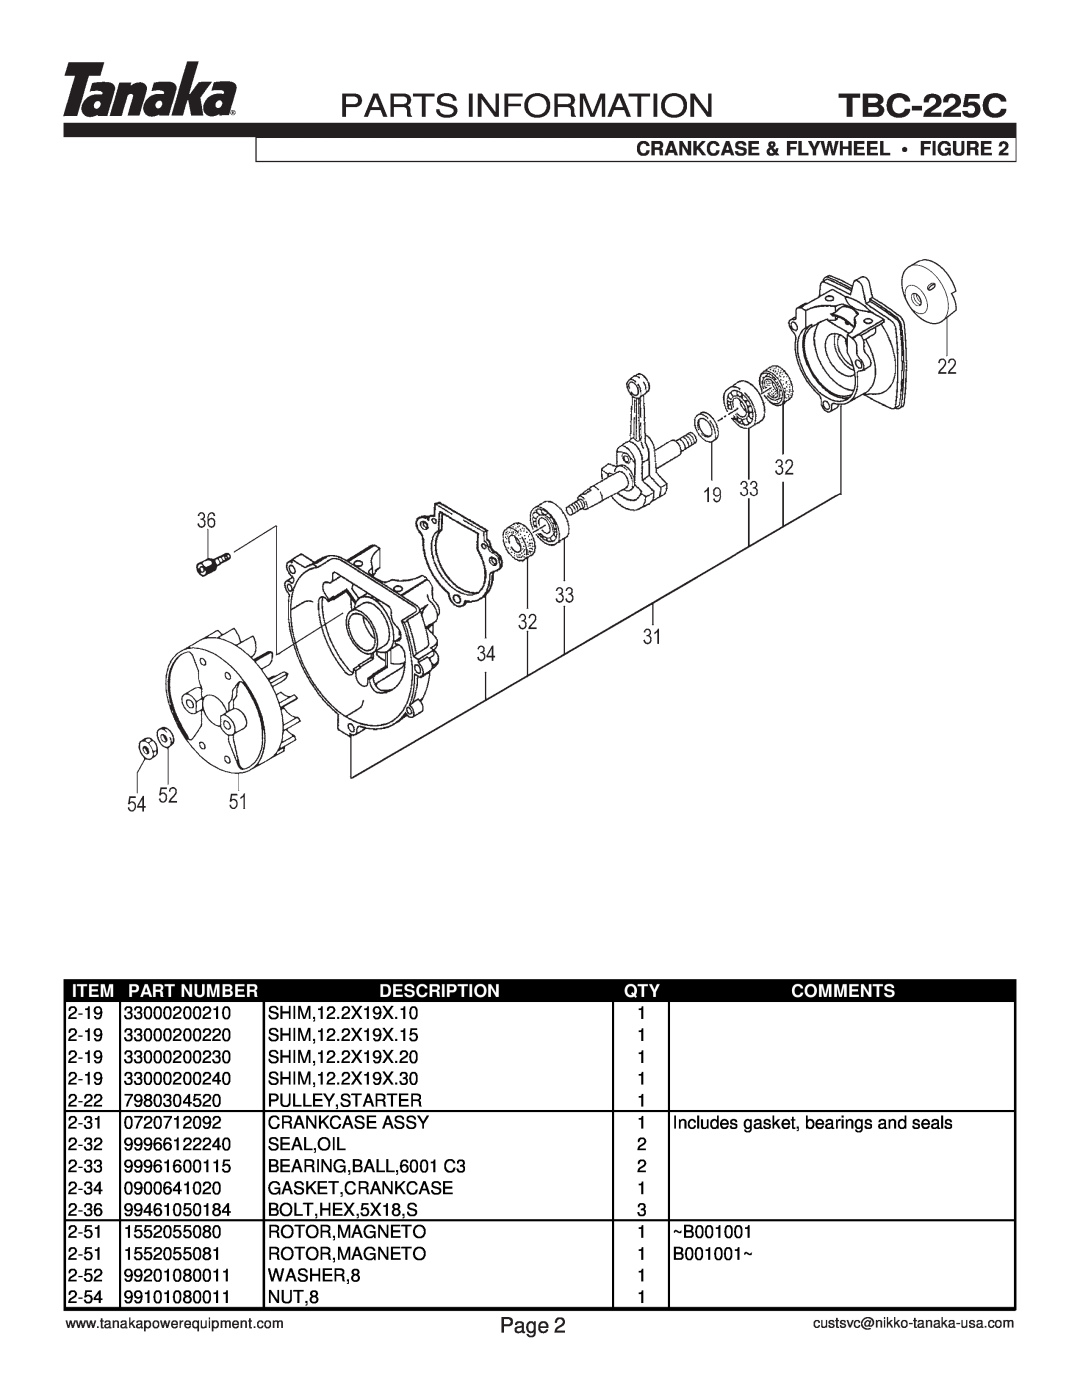 Tanaka manual PARTS INFORMATION TBC-225C, Crankcase & Flywheel Figure, Page, Part Number, Description, Comments 